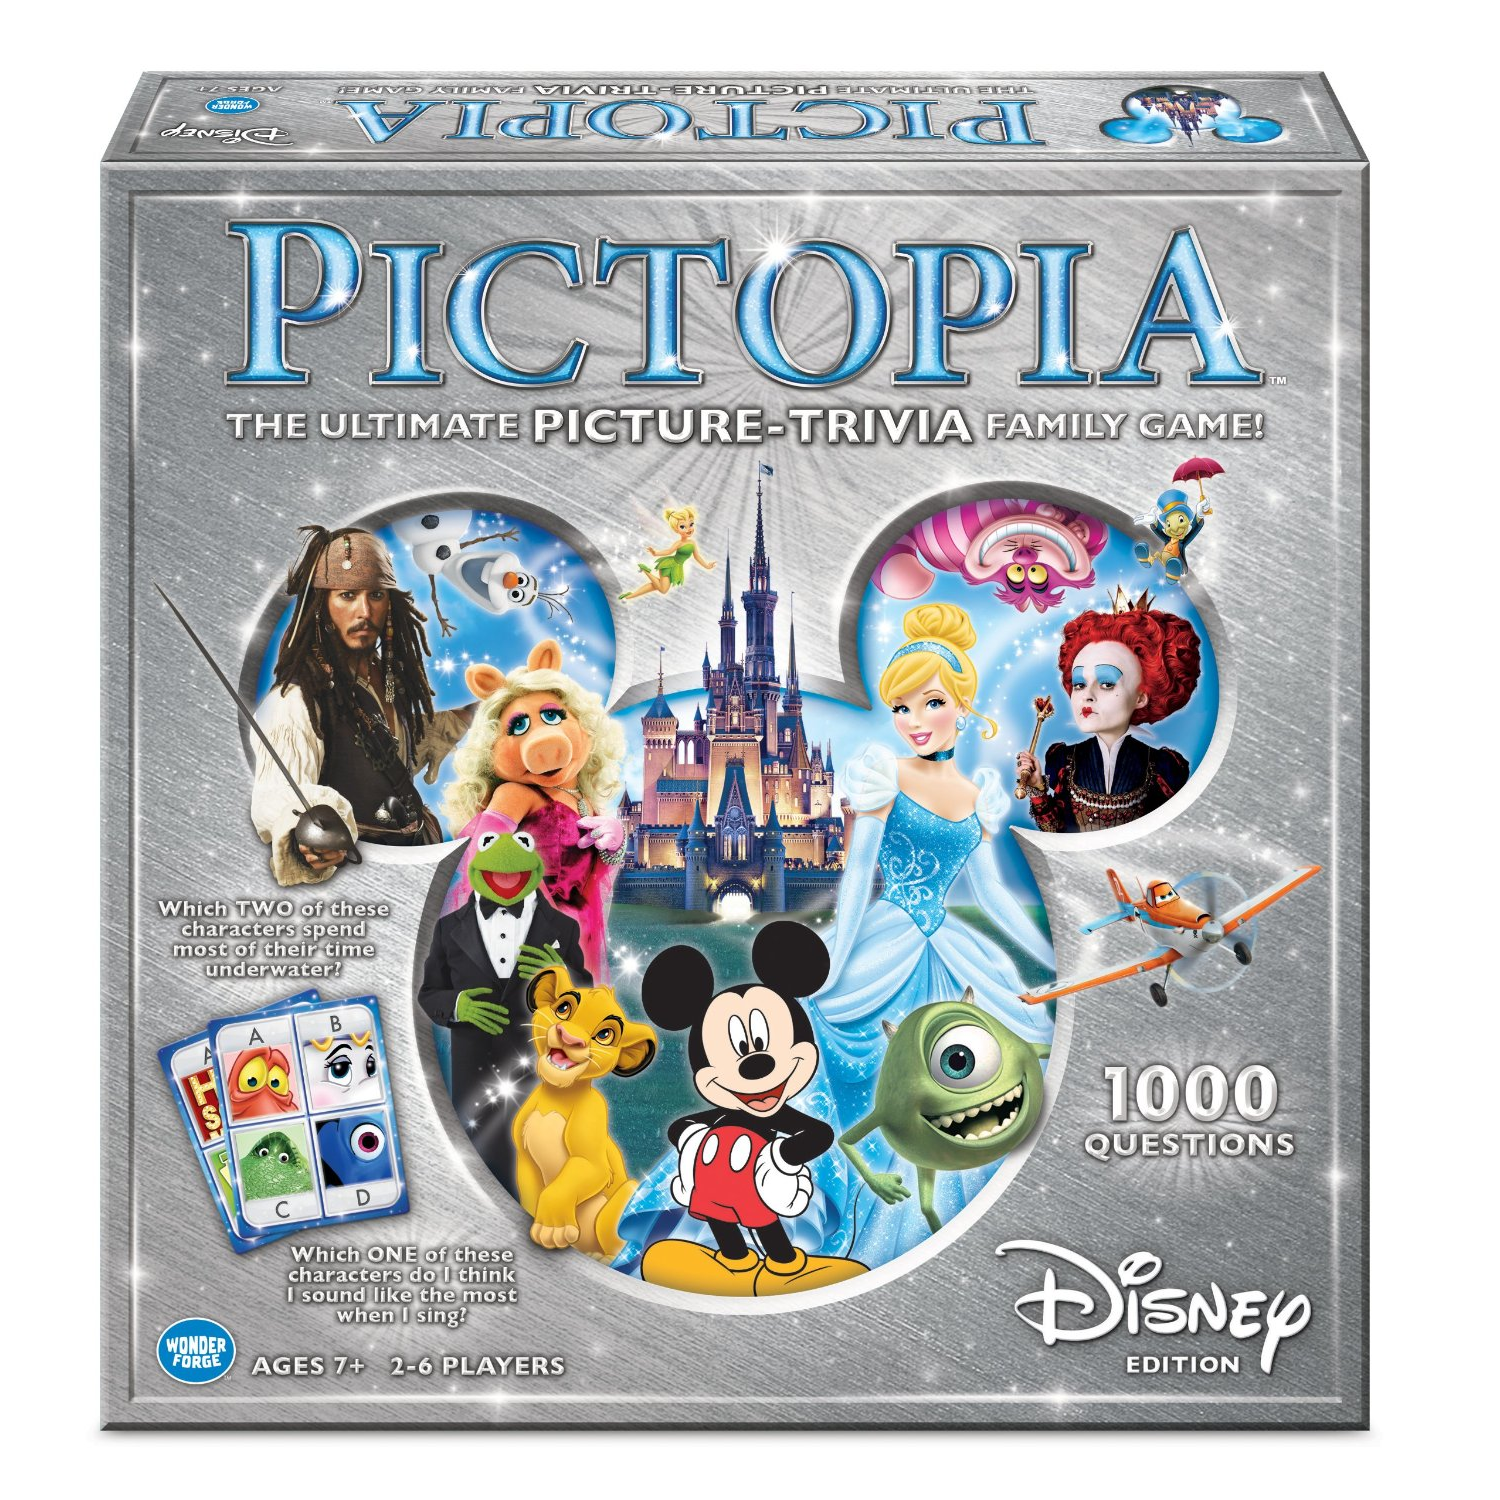 Amazon: Pictopia-Family Trivia Game: Disney Edition Only $14.99! (Great Family Christmas Gift Idea!)